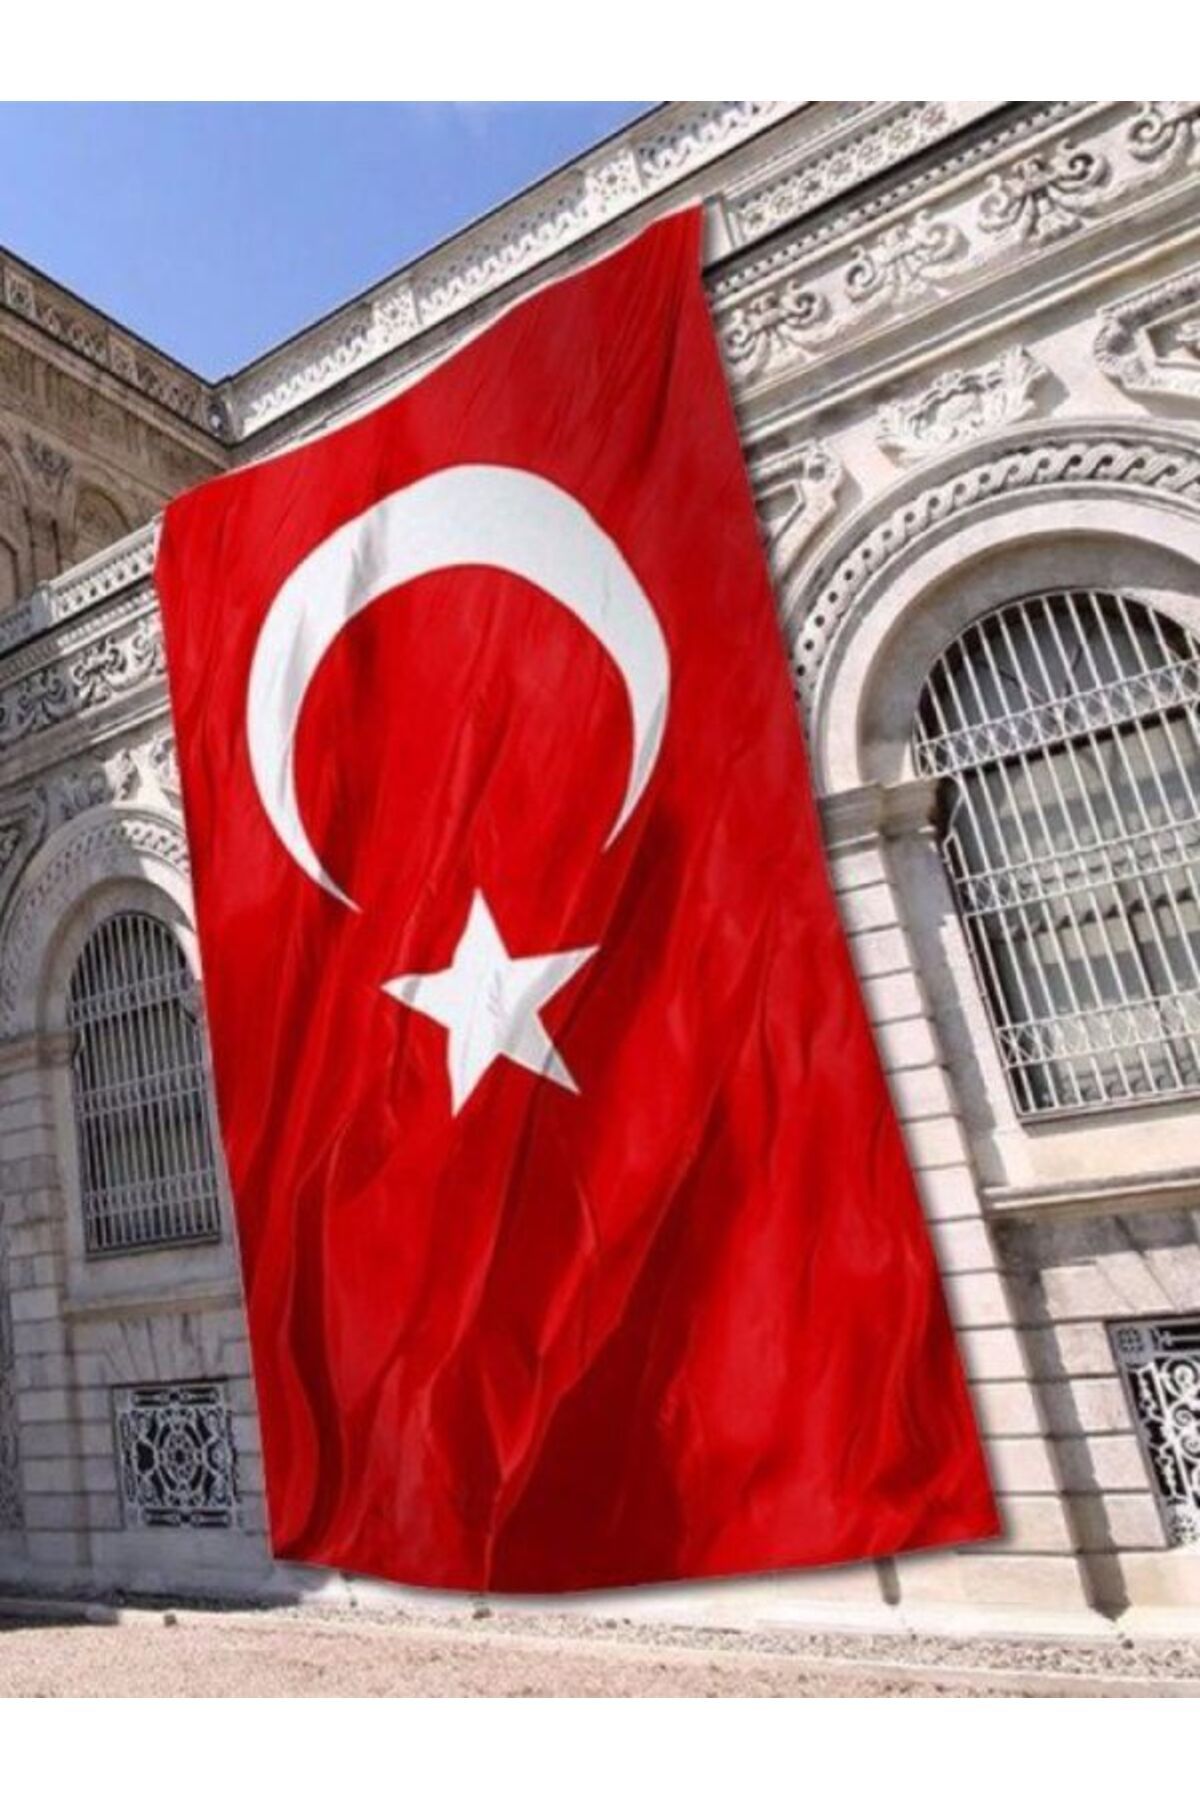 Flagtürk 3x4,5 metre Türk Bayrağı Raşel Kumaş